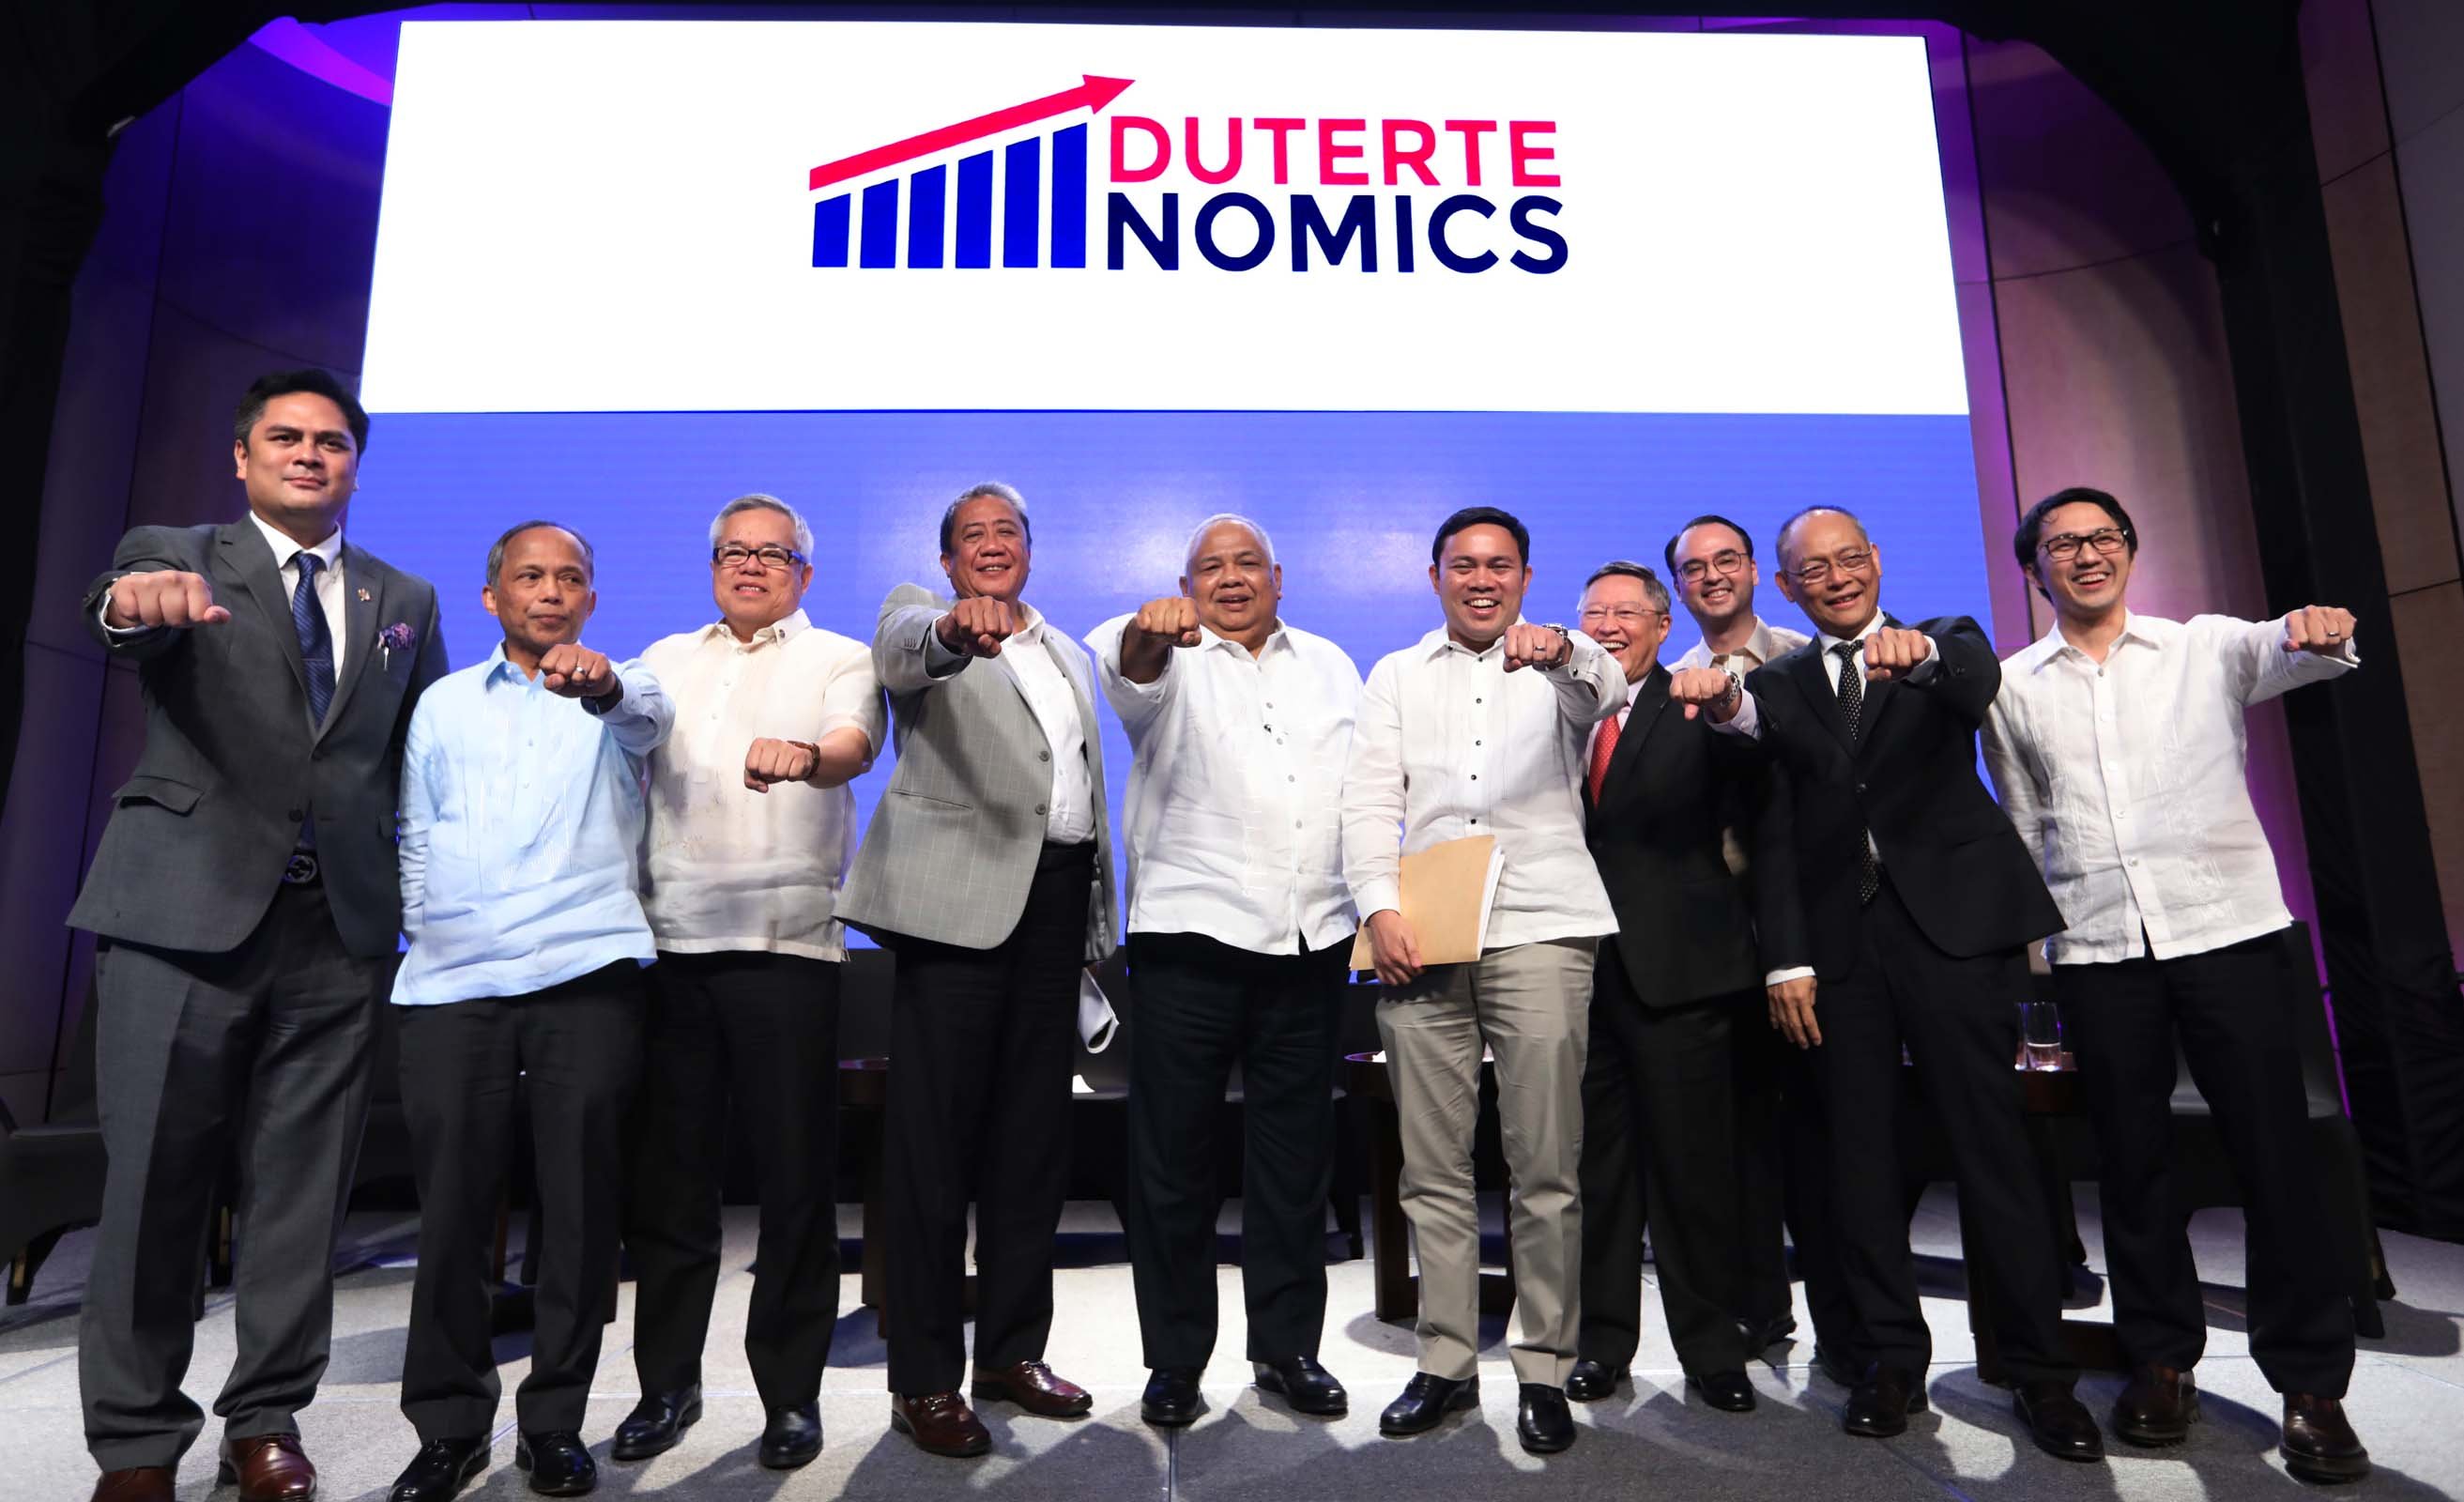 Cabinet members with familiar Duterte fist pose